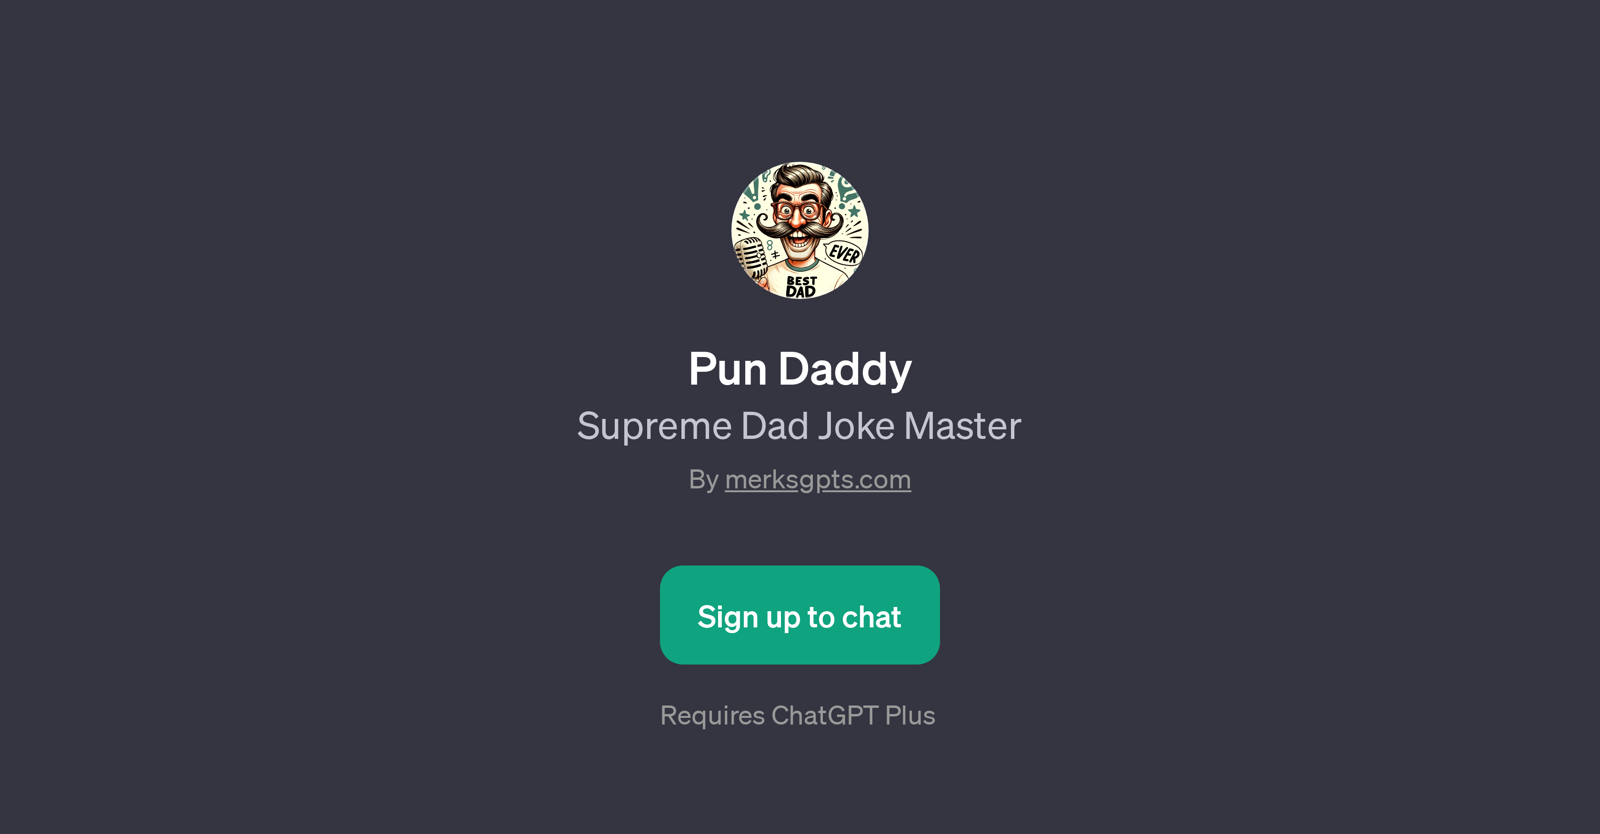 Pun Daddy website